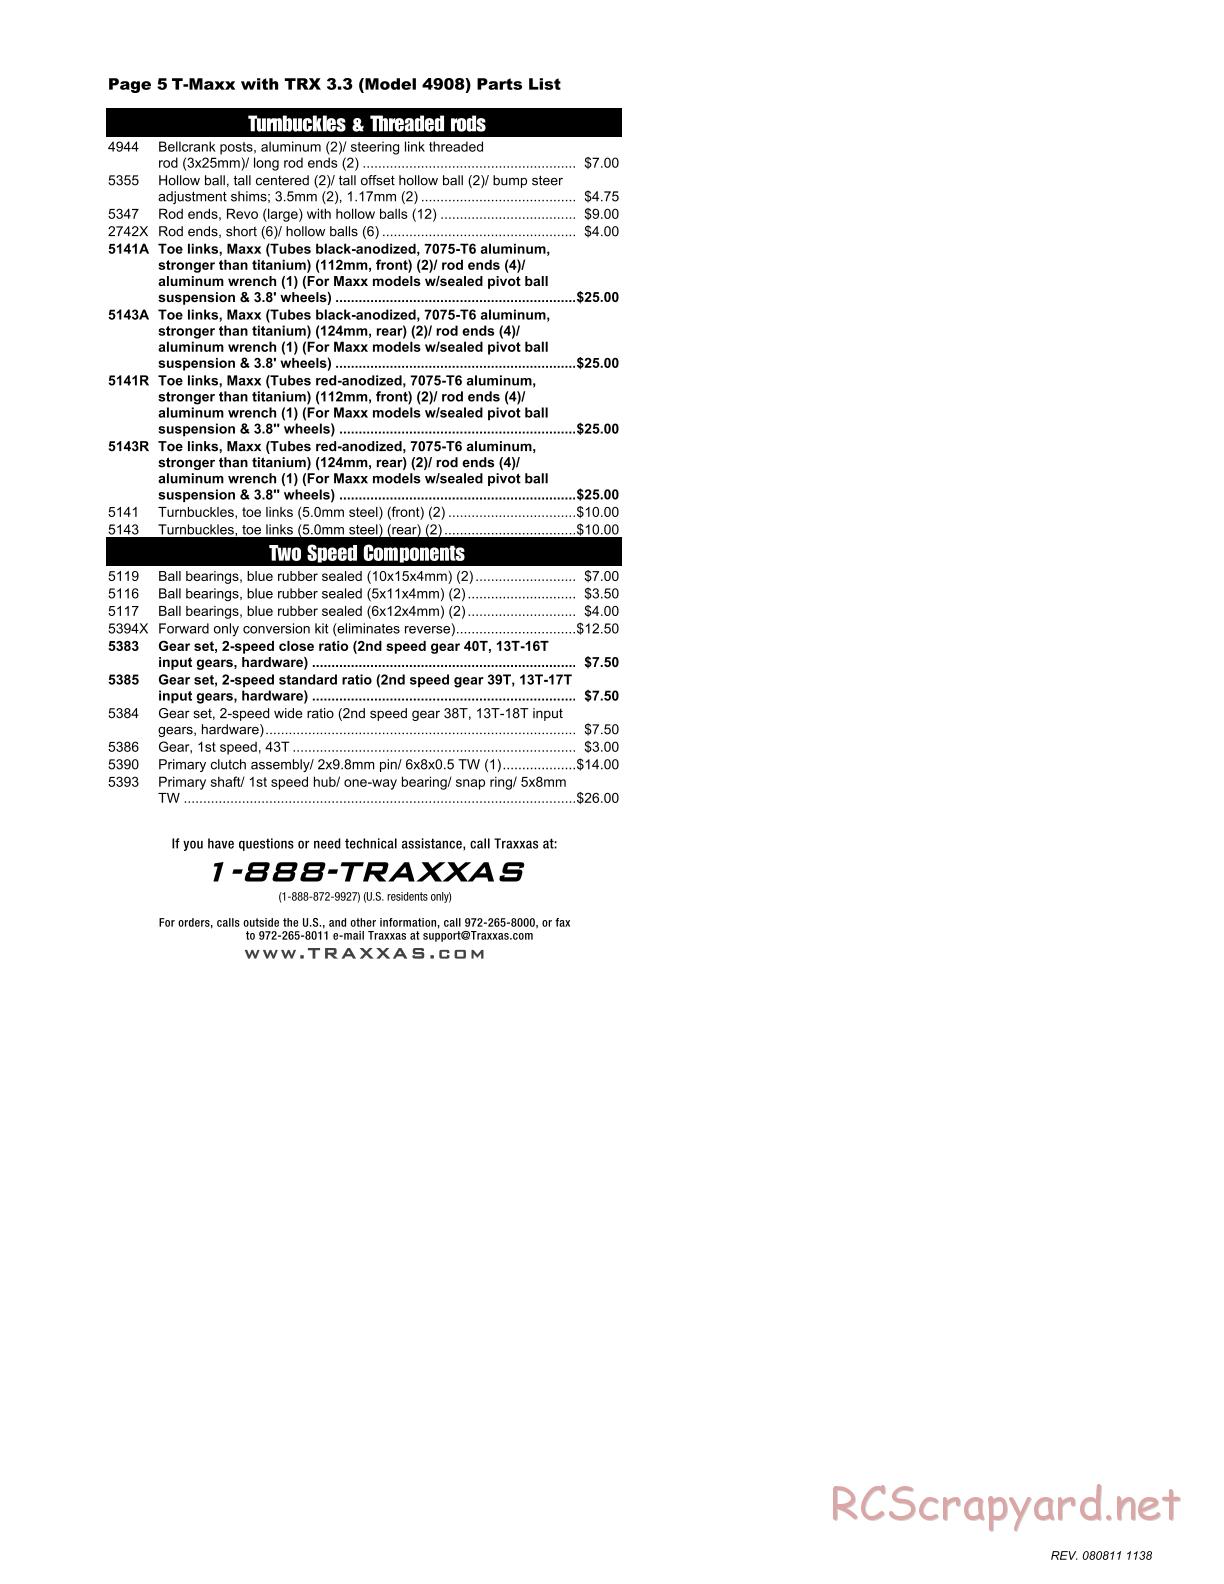 Traxxas - T-Maxx 3.3 (2008) - Parts List - Page 5